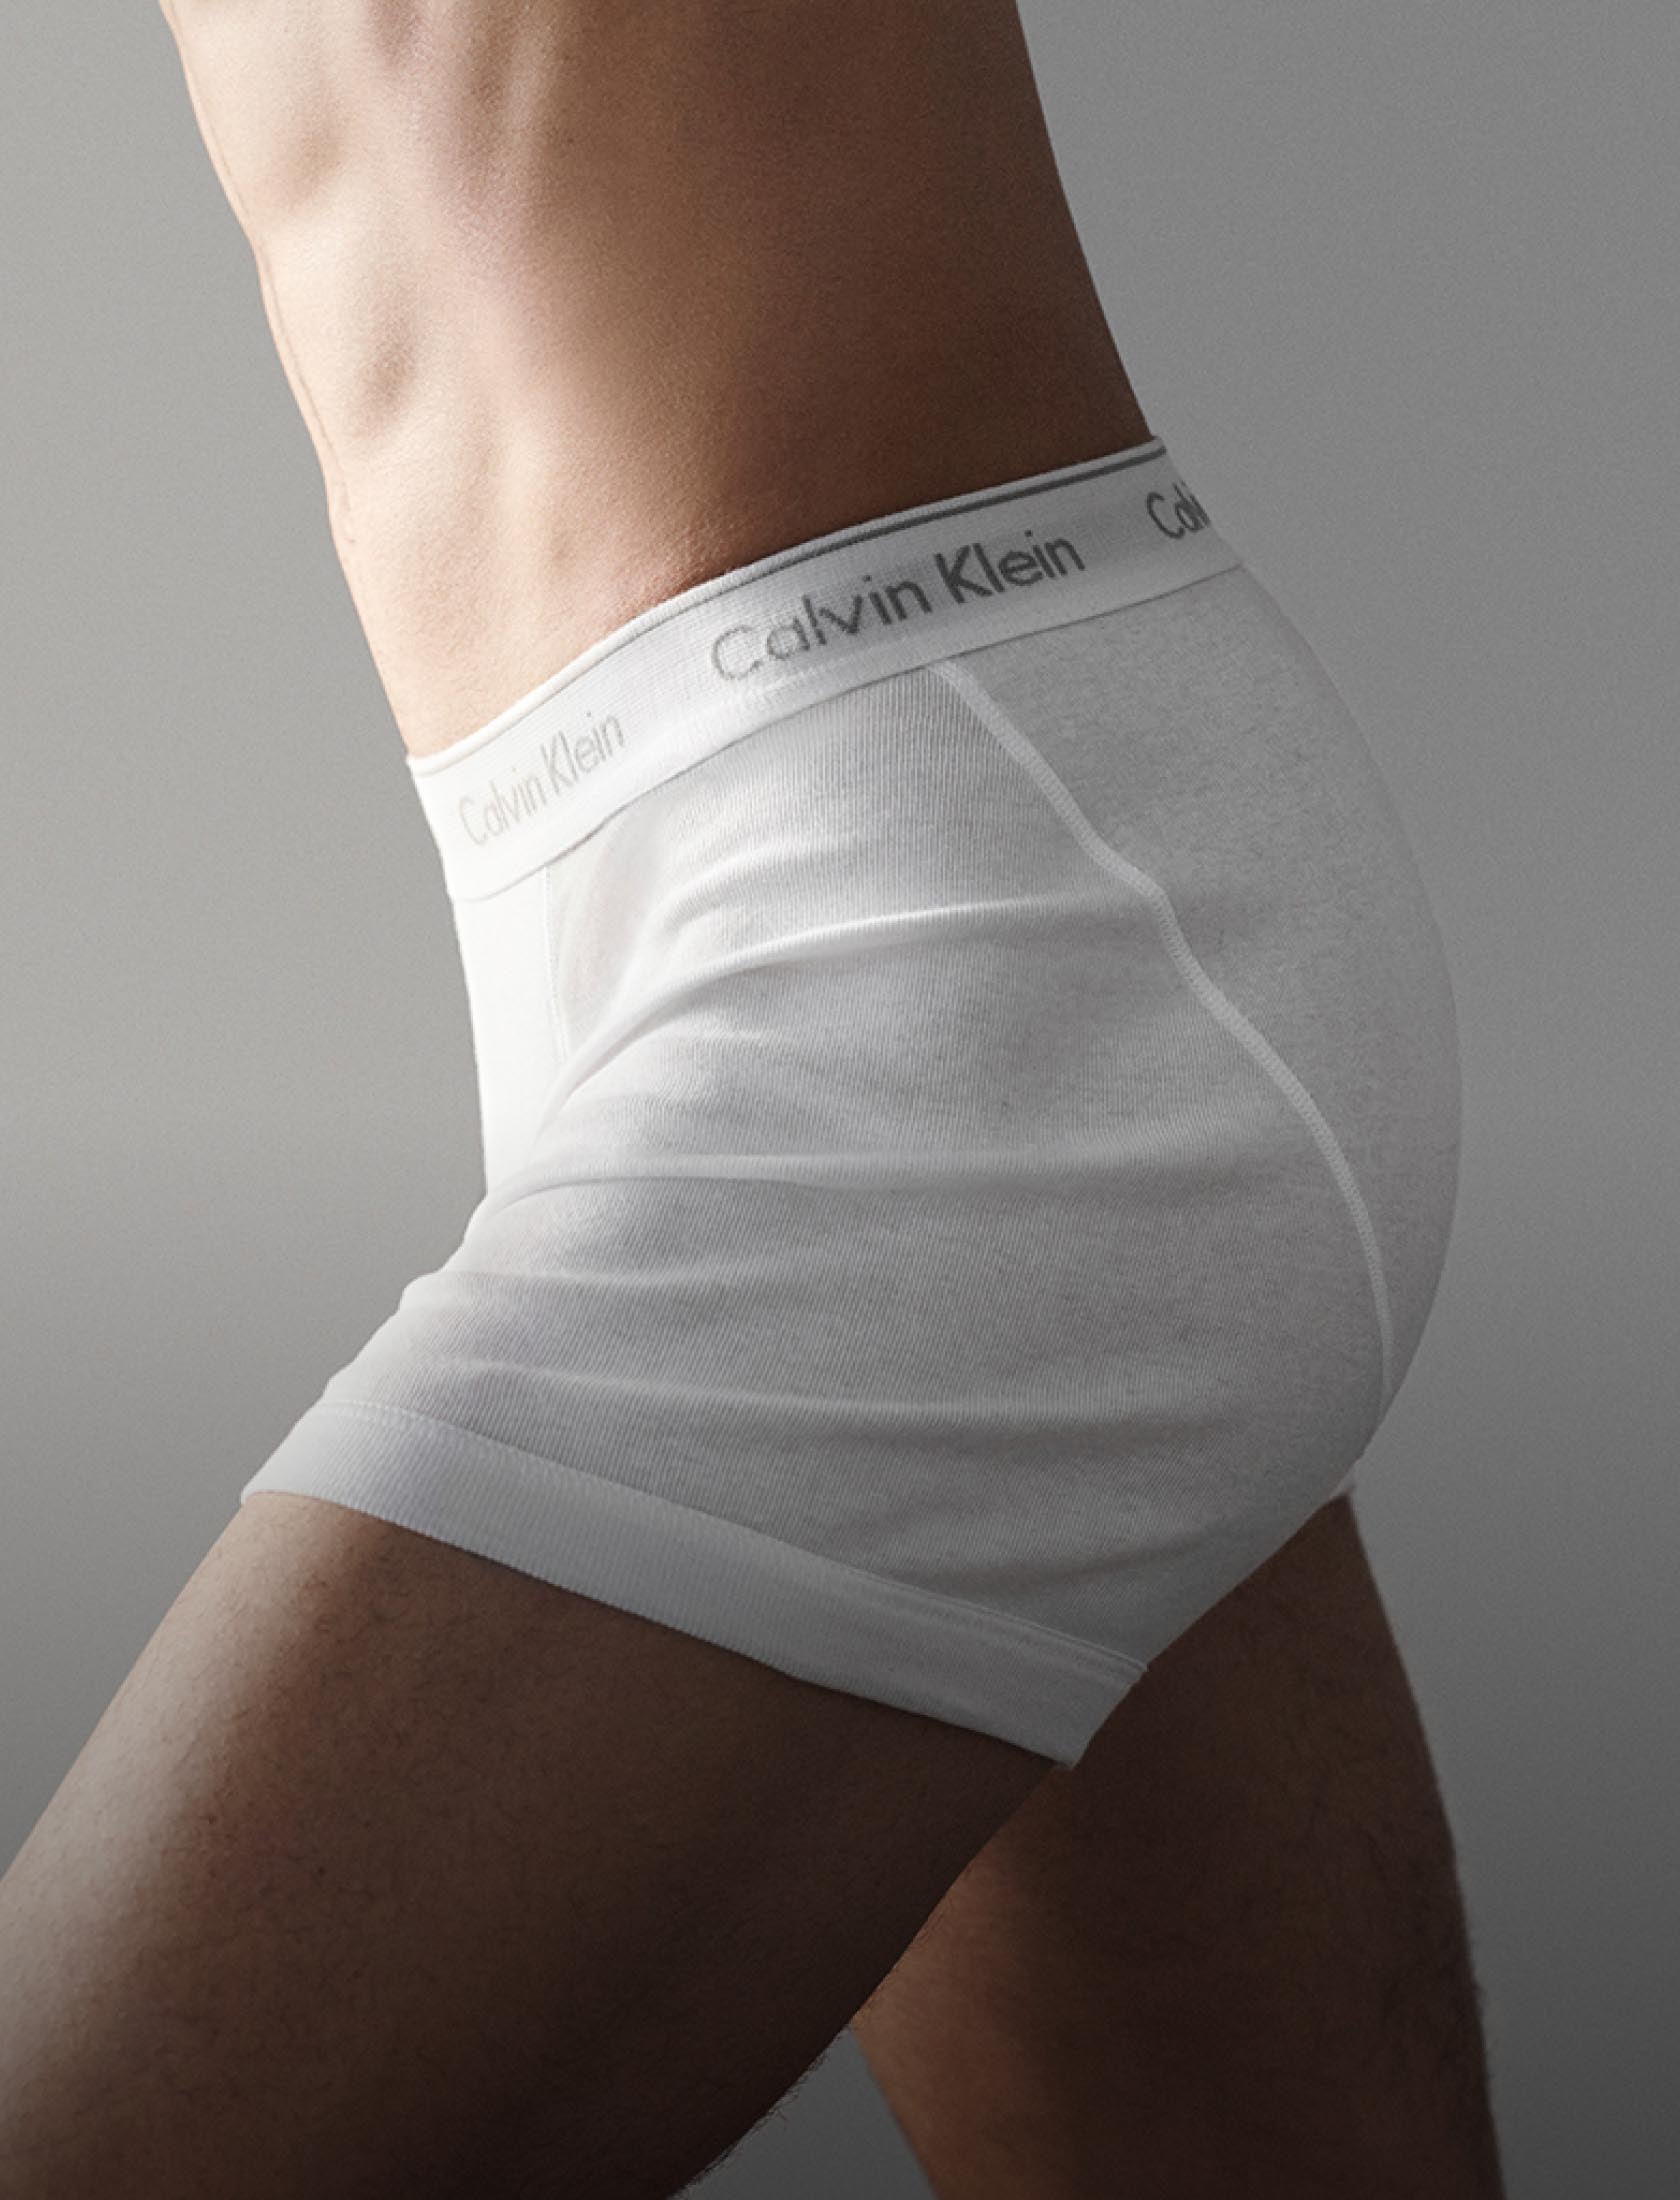 Calvin Klein Men's Cotton Classic Fit 3-Pack Boxer Brief, White, Md